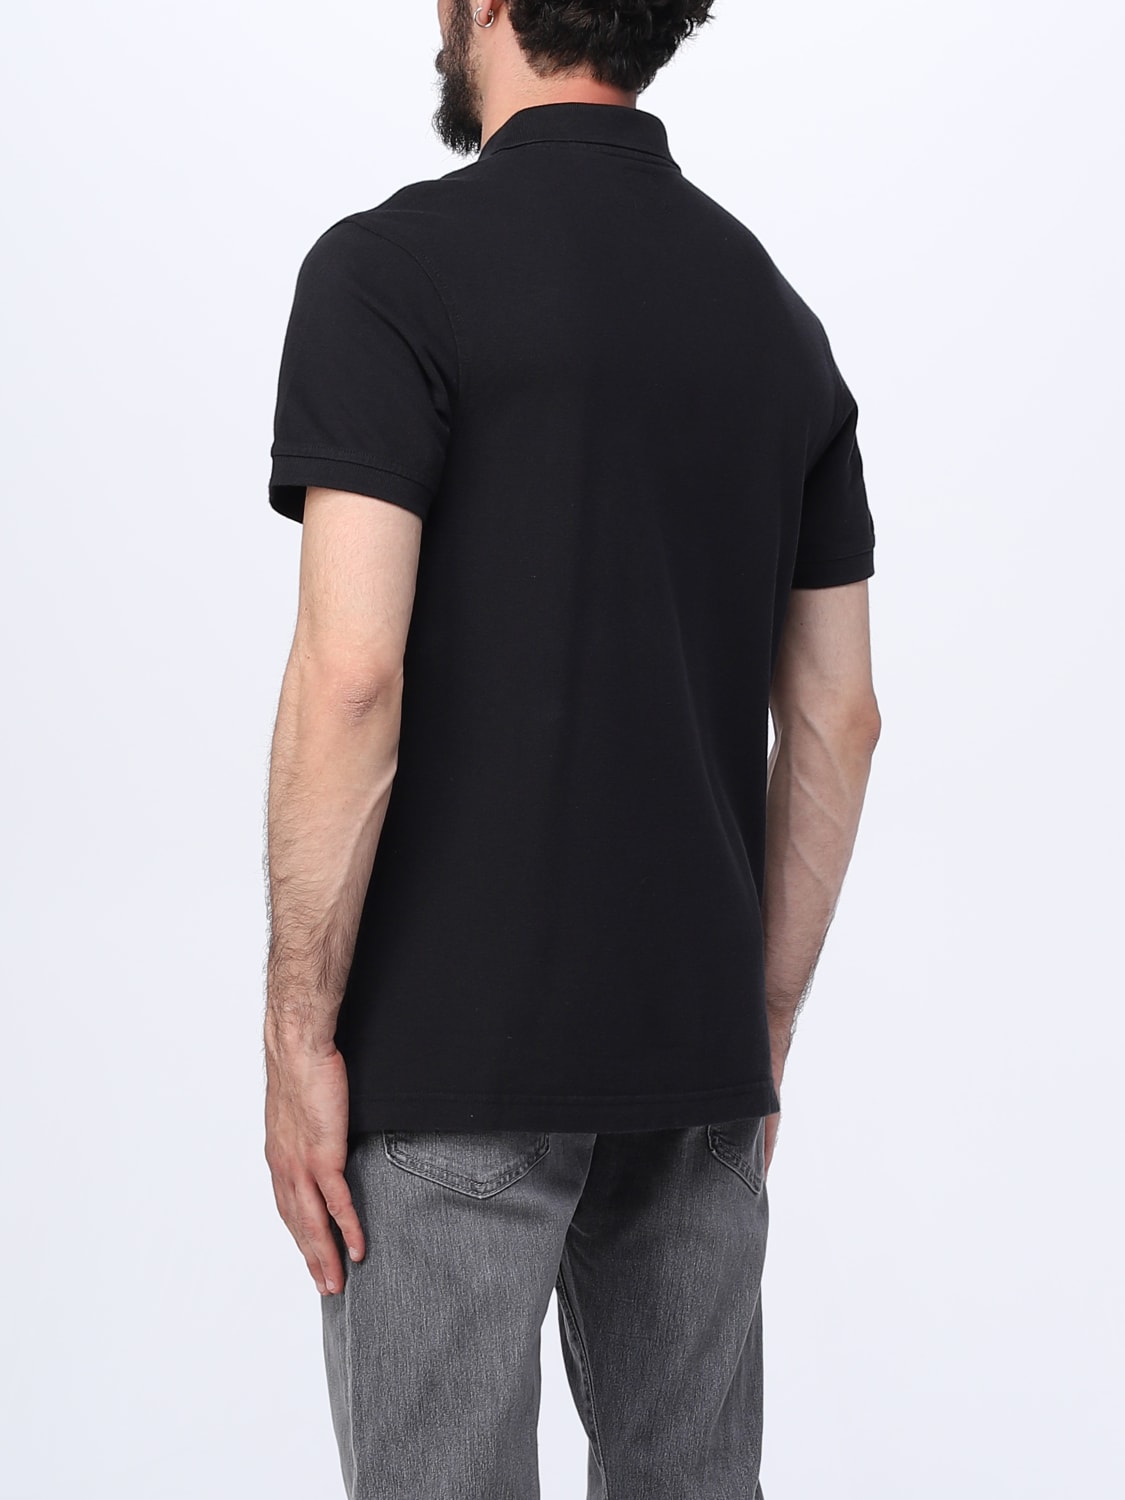 LEVI'S: polo shirt for man - Black | Levi's polo shirt 358830007 online ...